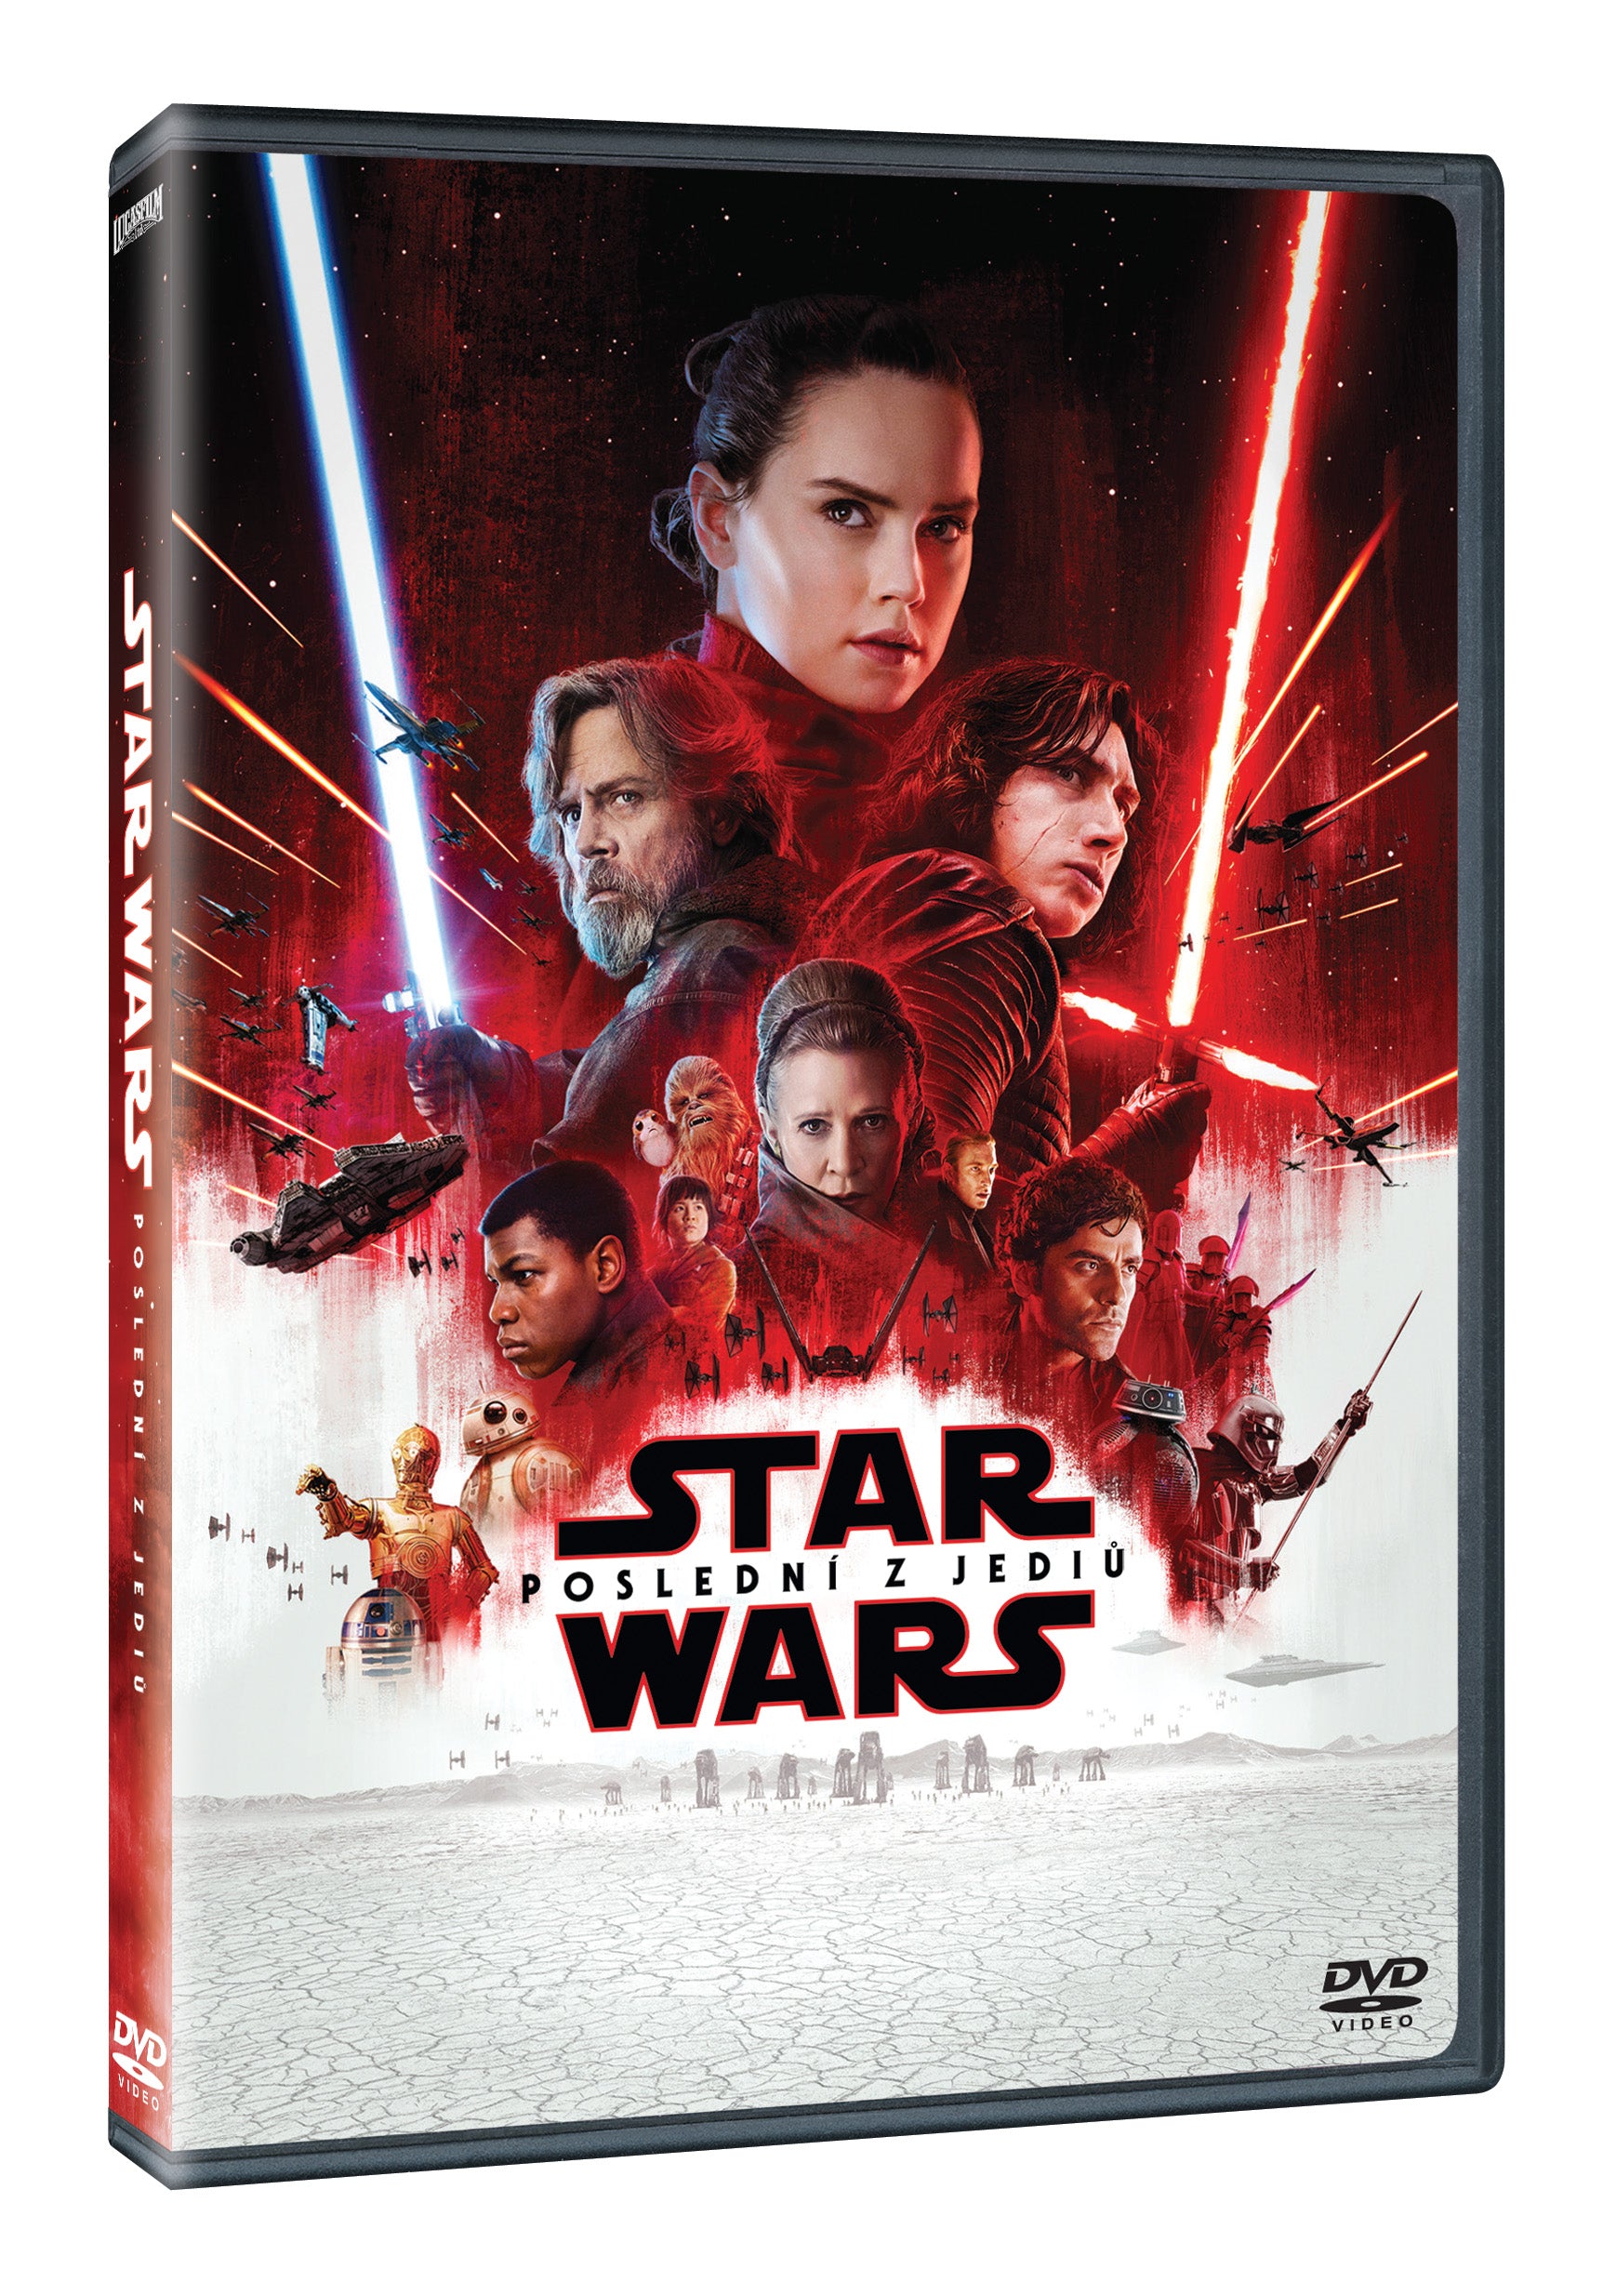 Star Wars: Posledni z Jediu DVD / Star Wars: The Last Jedi